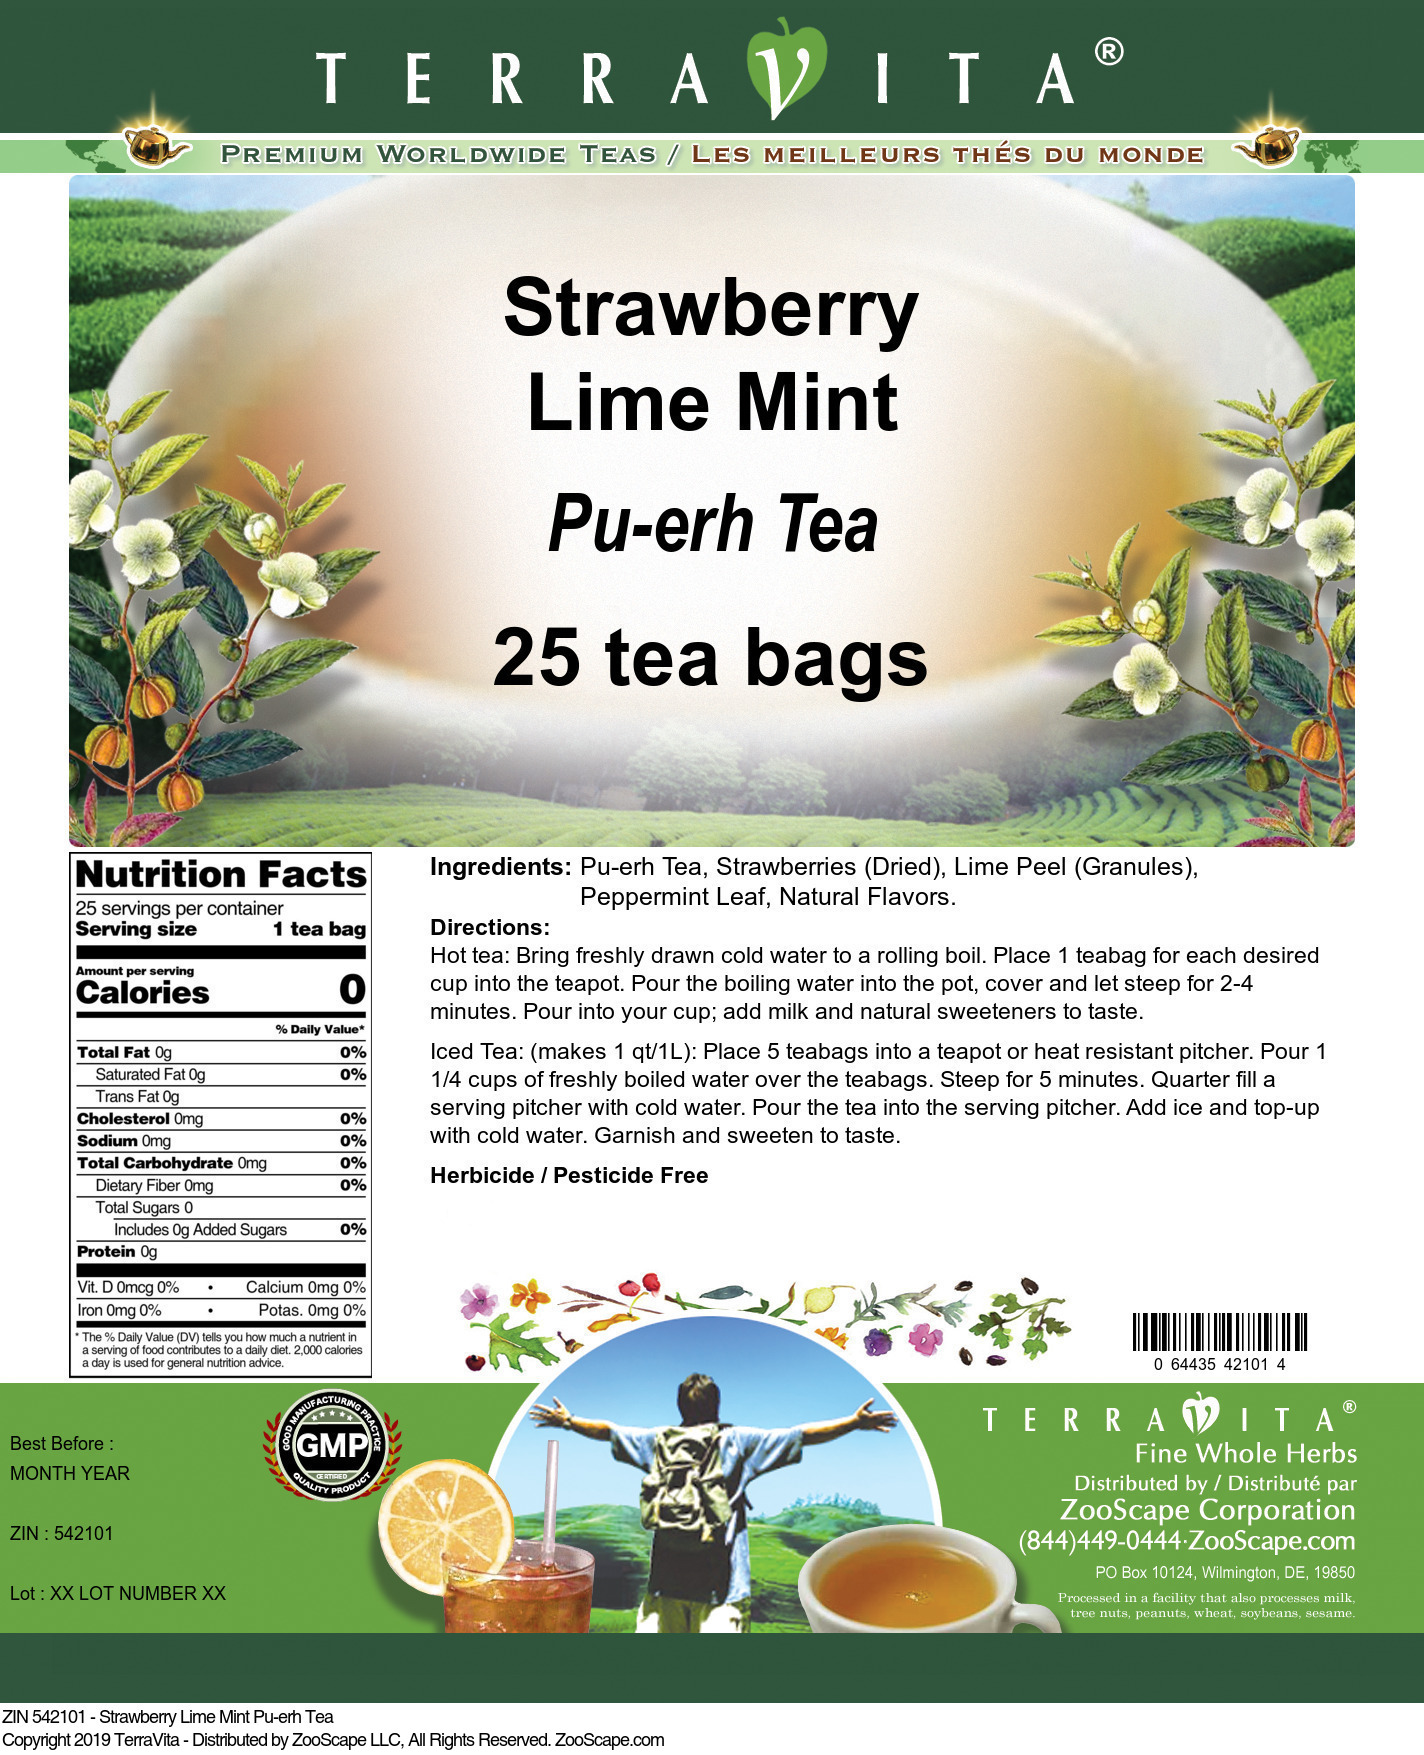 Strawberry Lime Mint Pu-erh Tea - Label